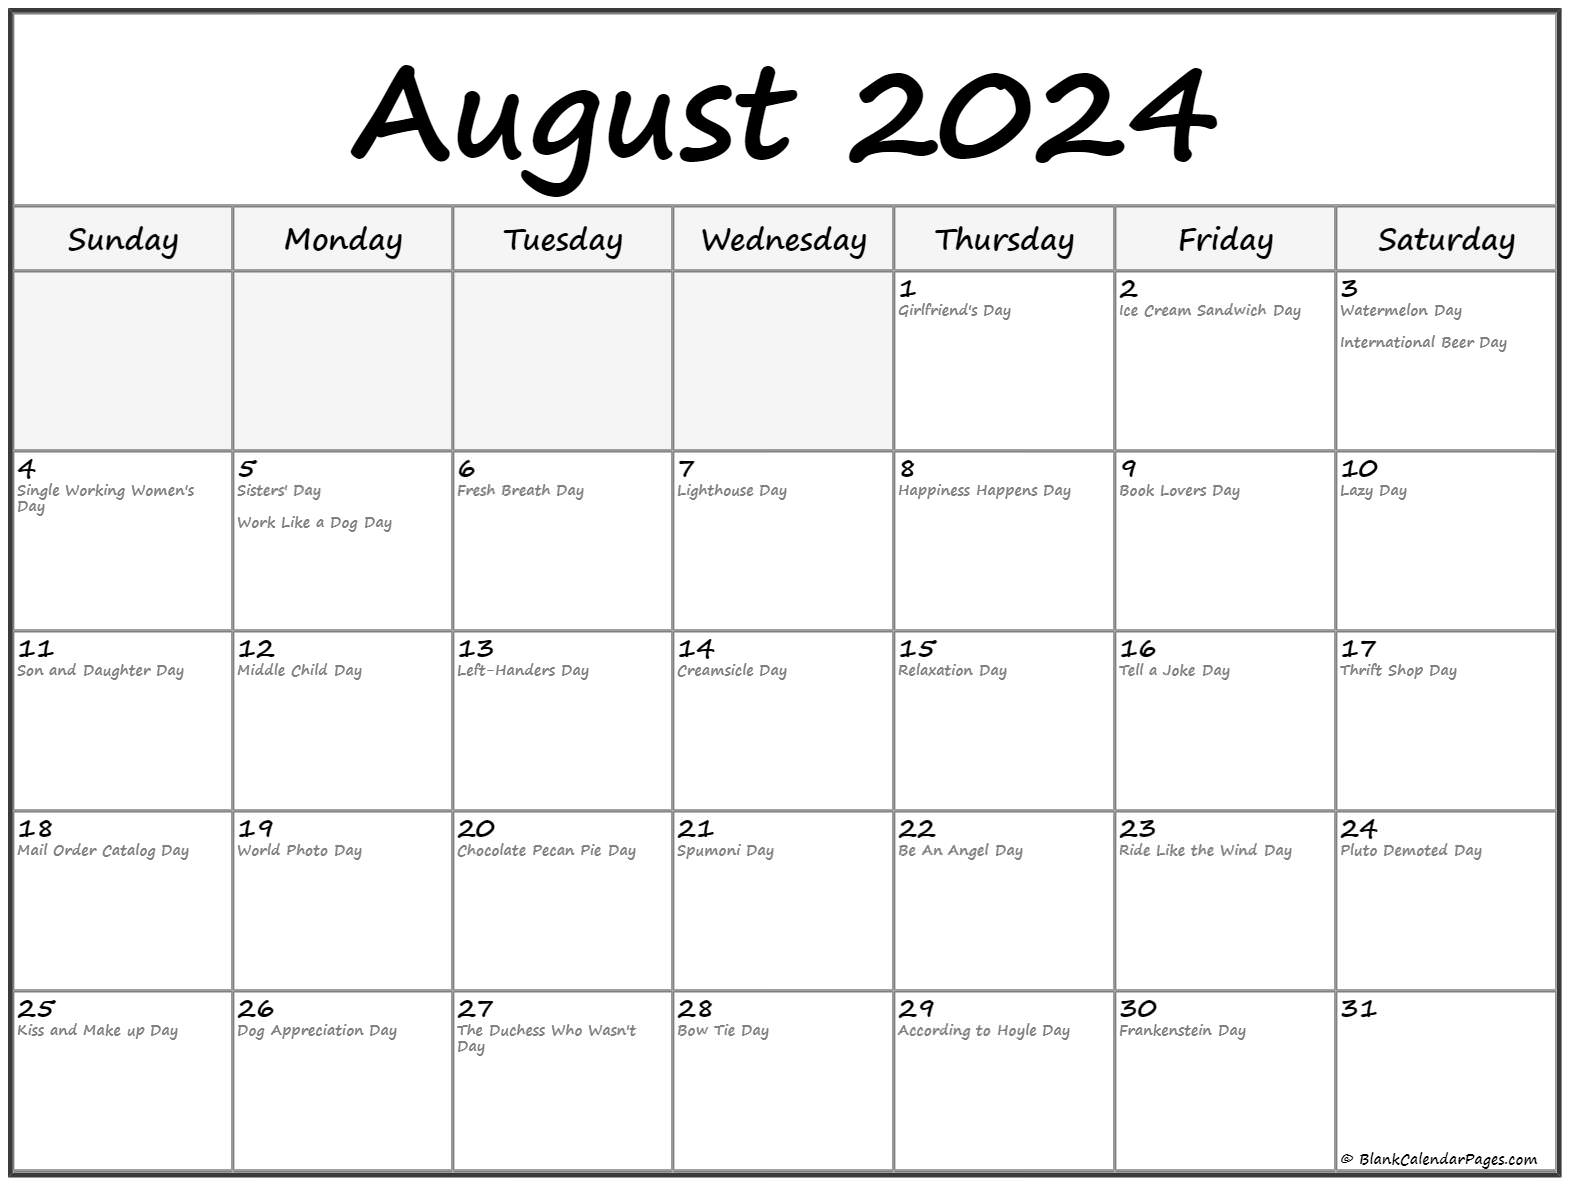 National Day Calendar August 2022 August 2022 With Holidays Calendar